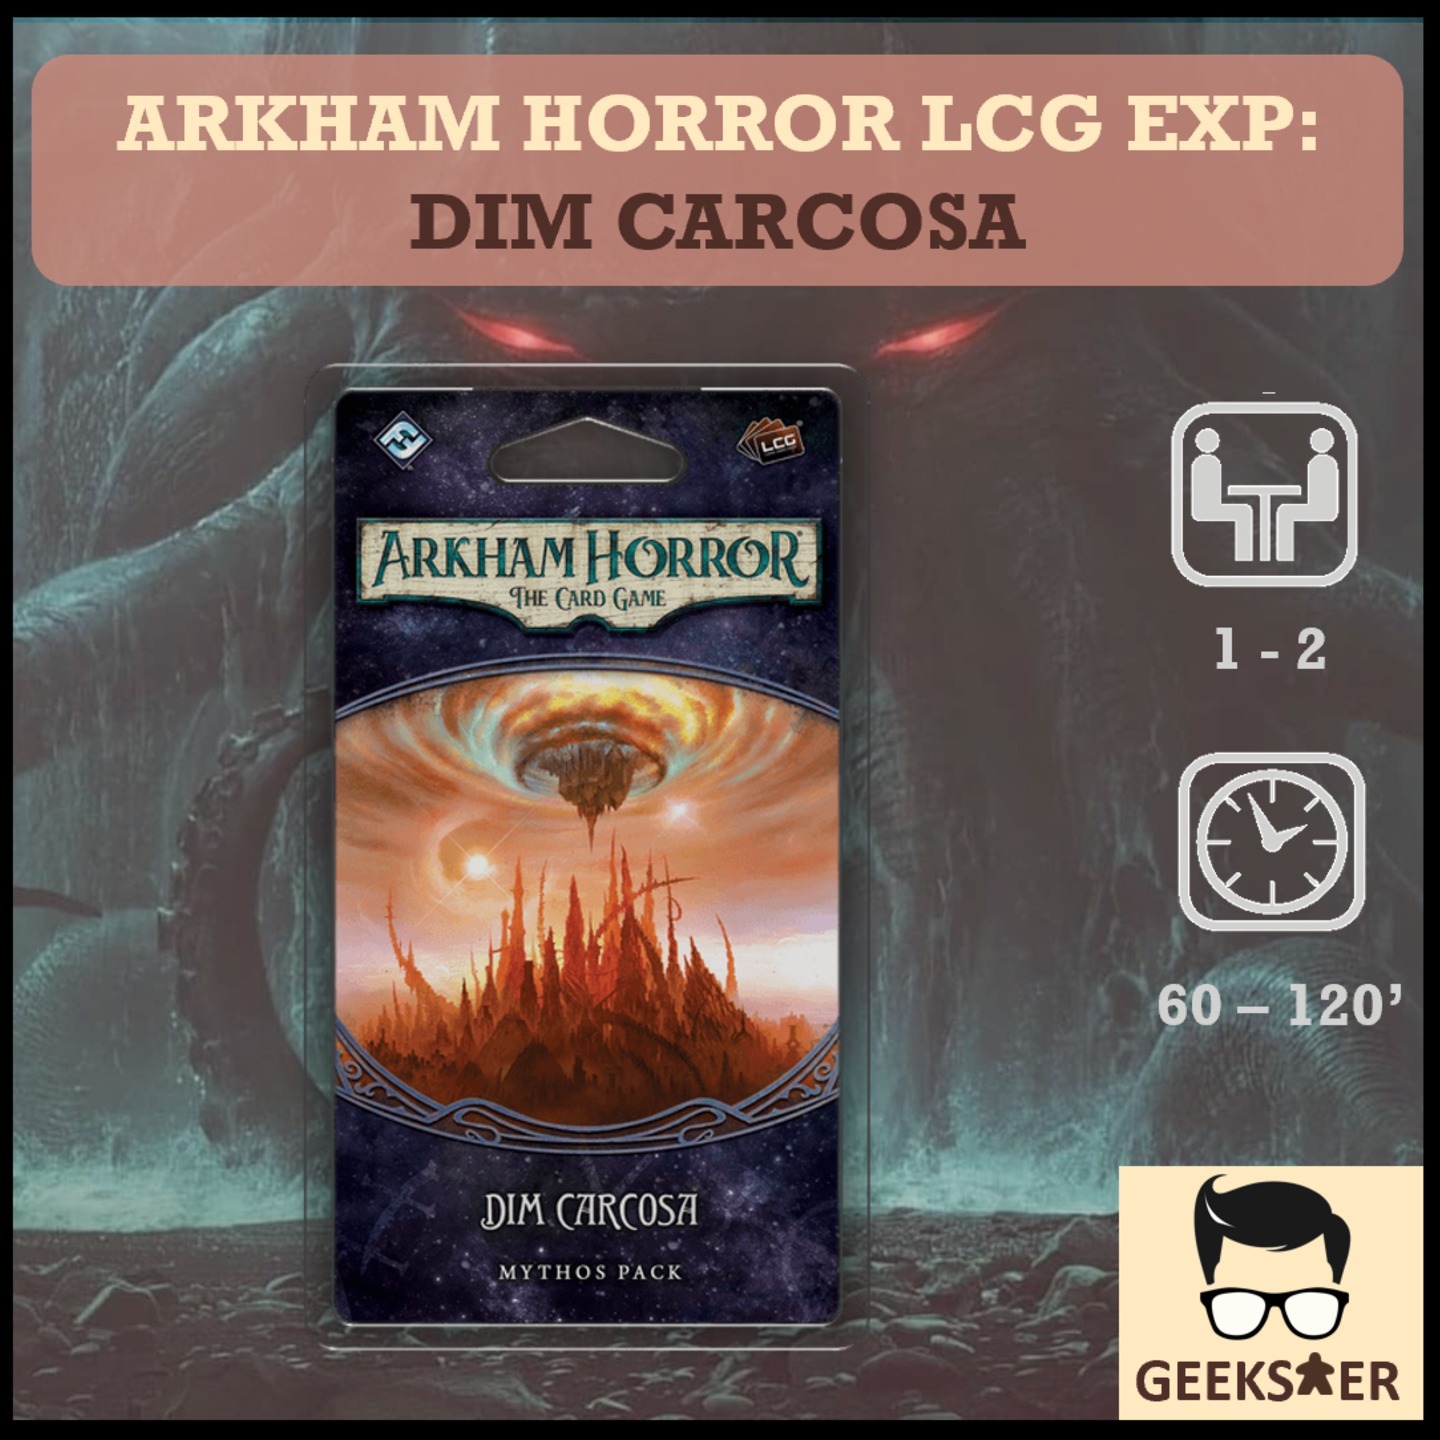 Arkham Horror LCG Exp Dim Carcosa